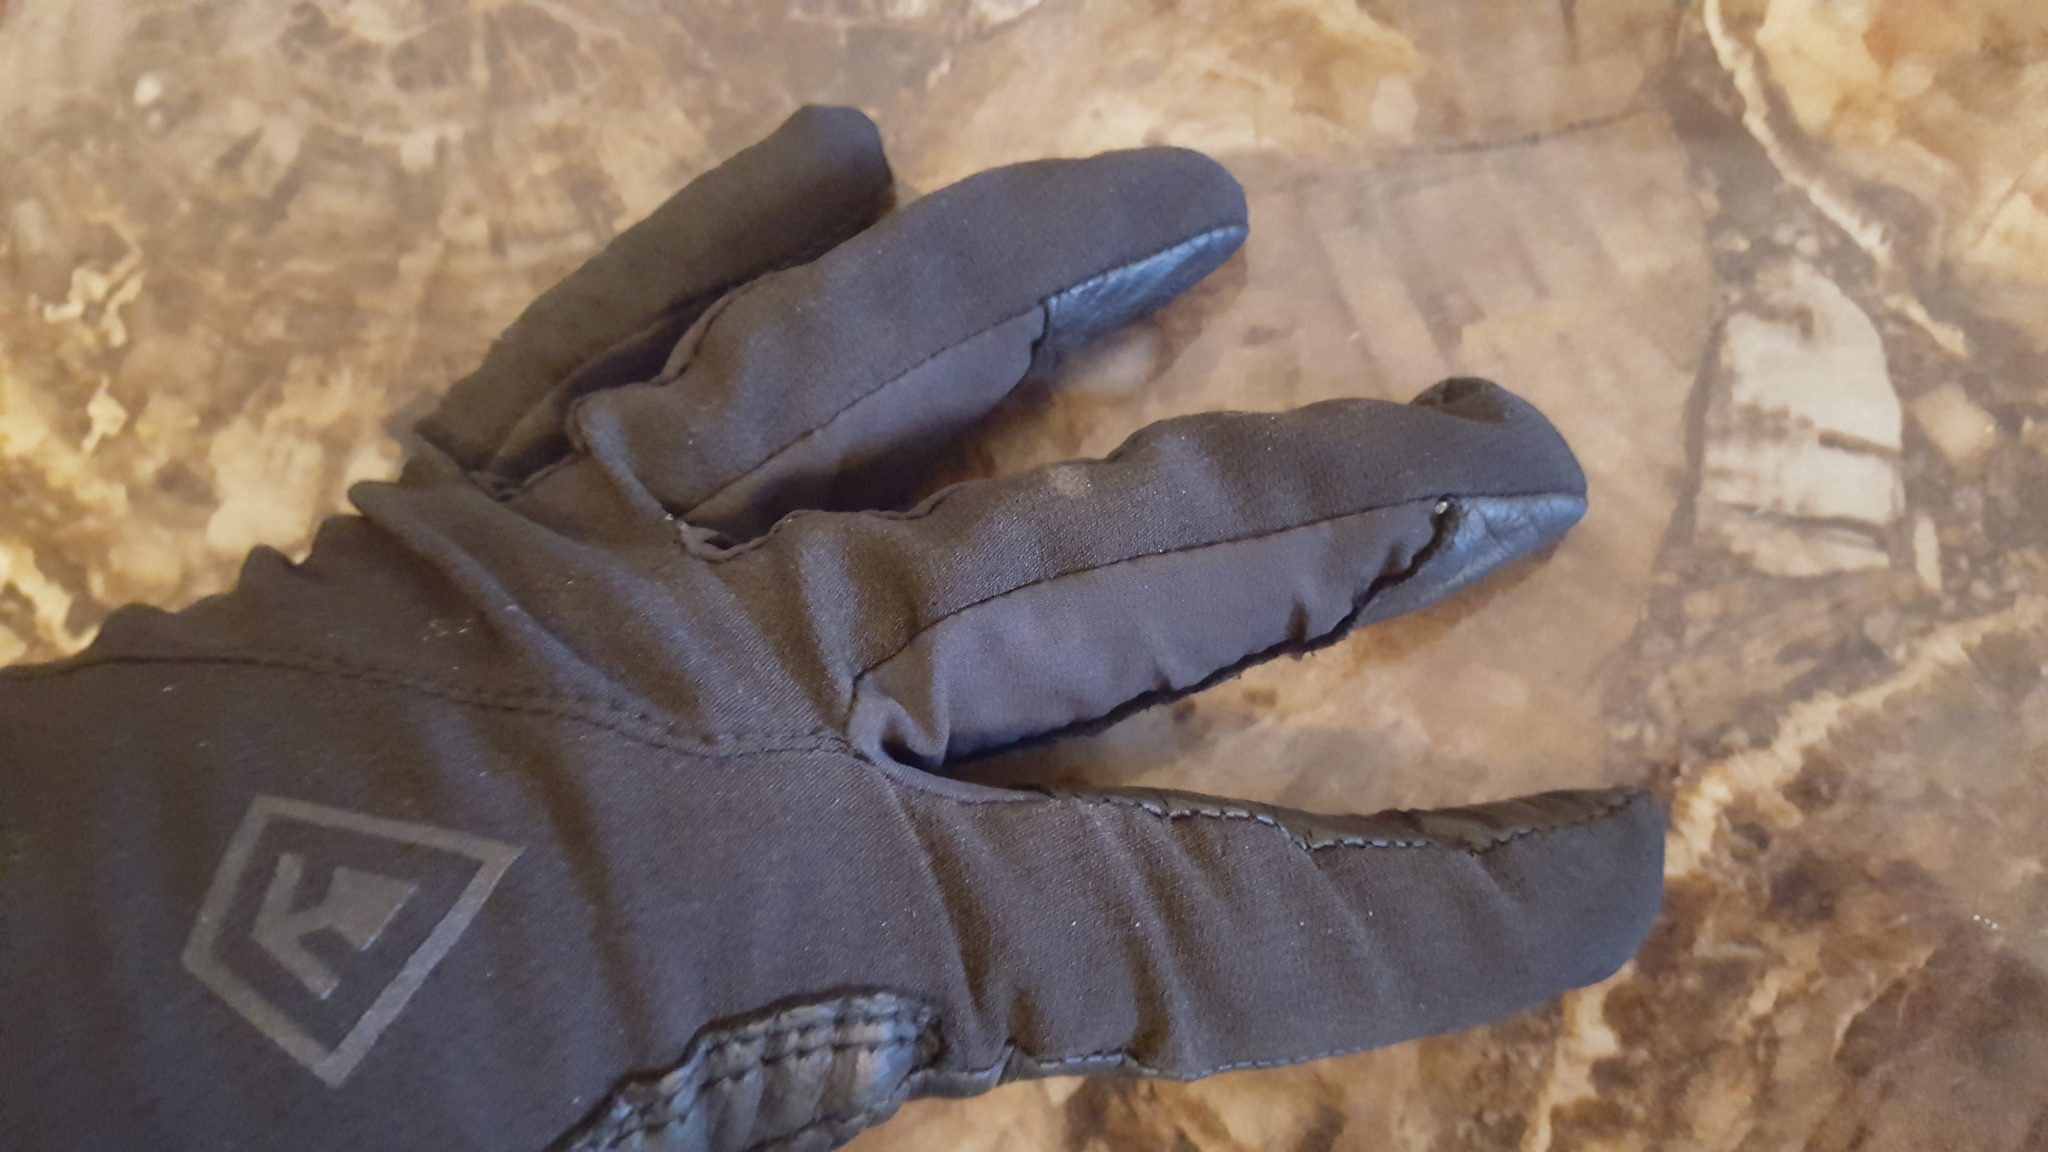 Men’s Medium Duty Padded Glove